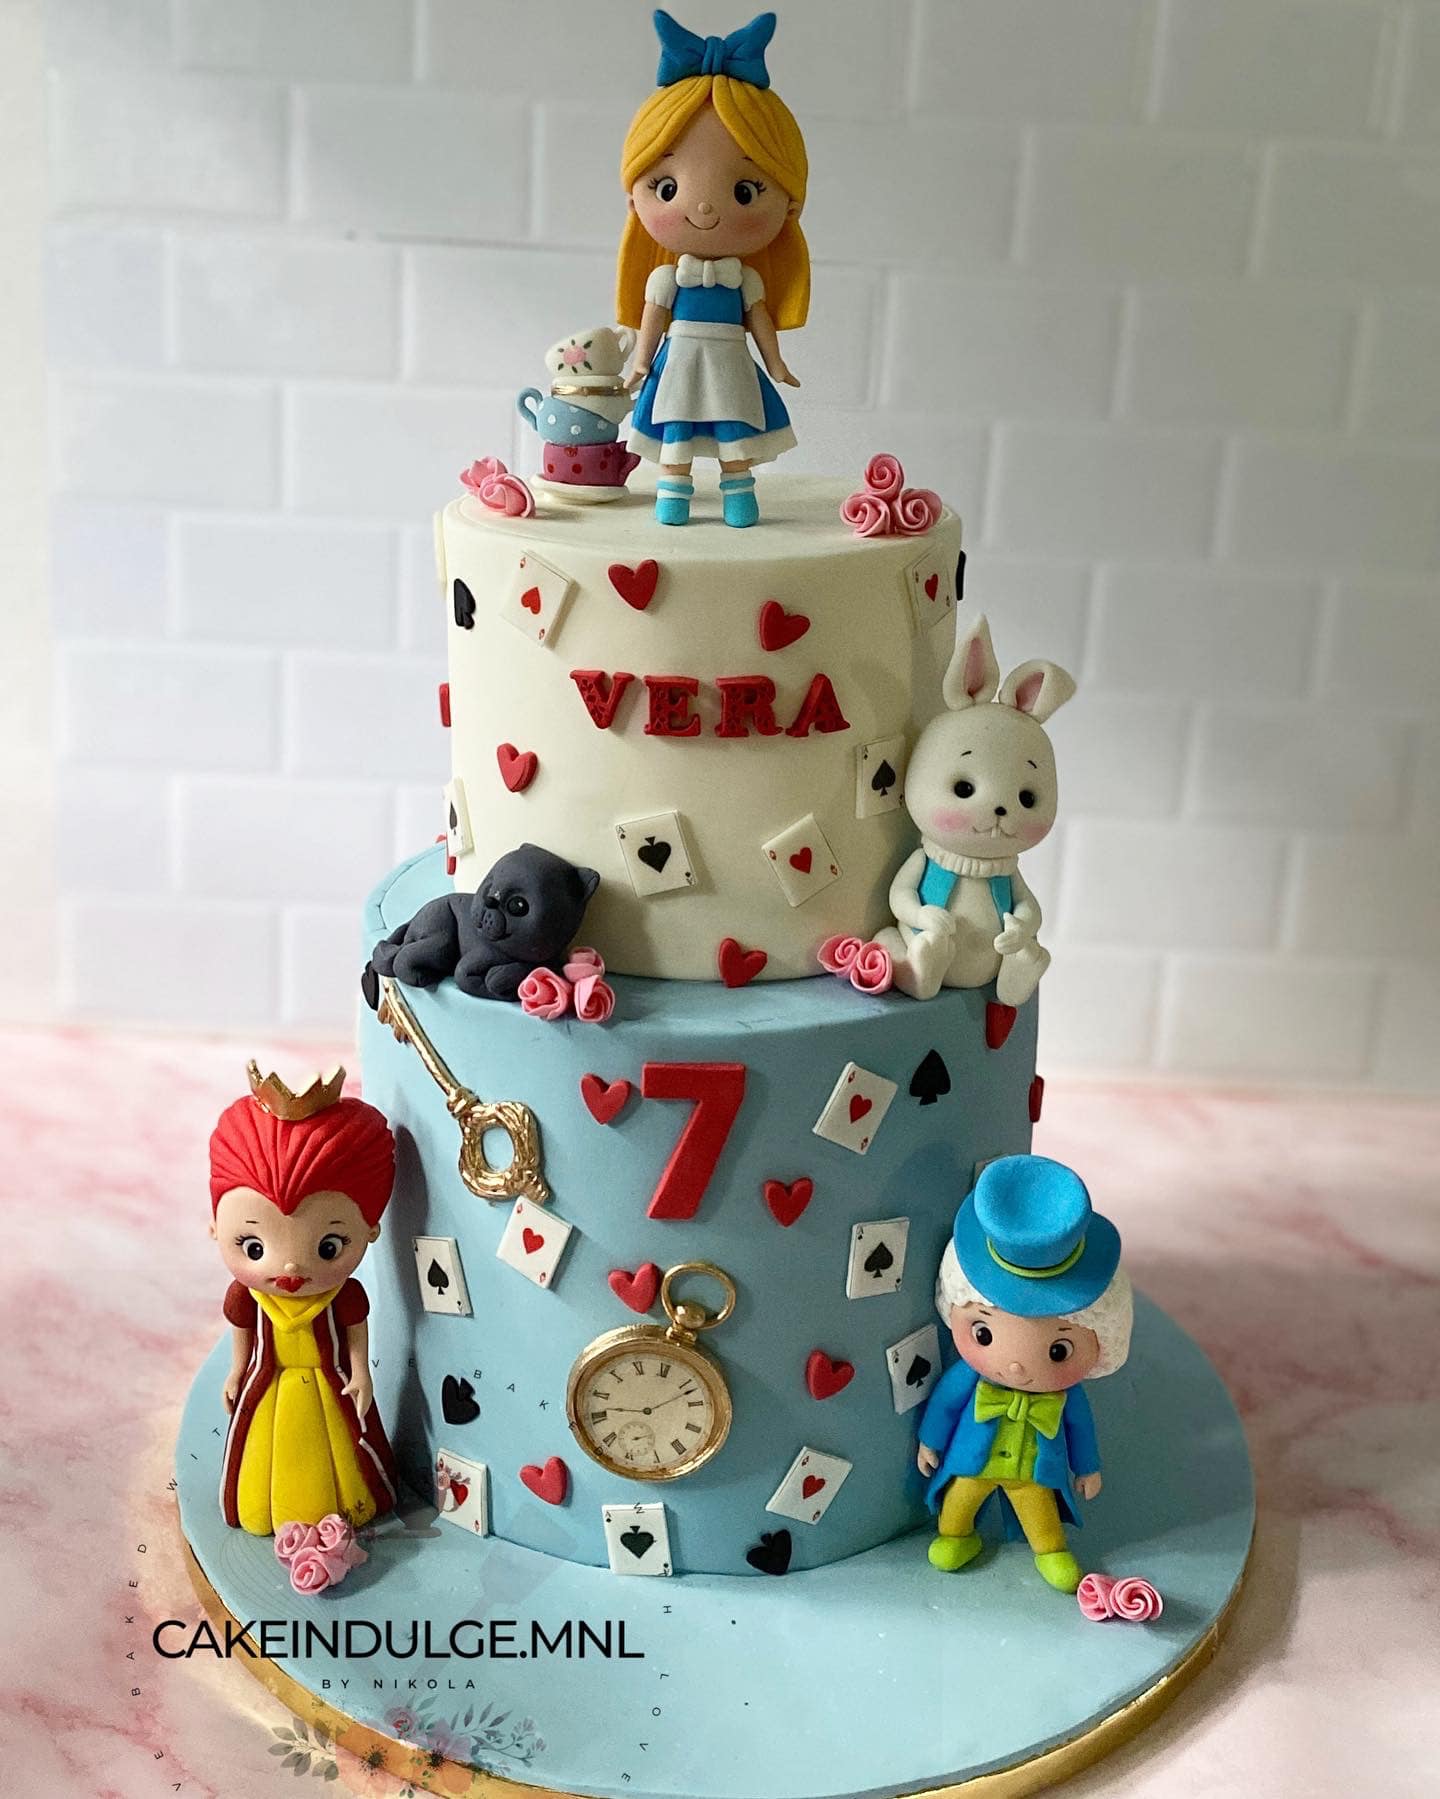 Vera Mona Cake and Bake – MakeUpMania.com